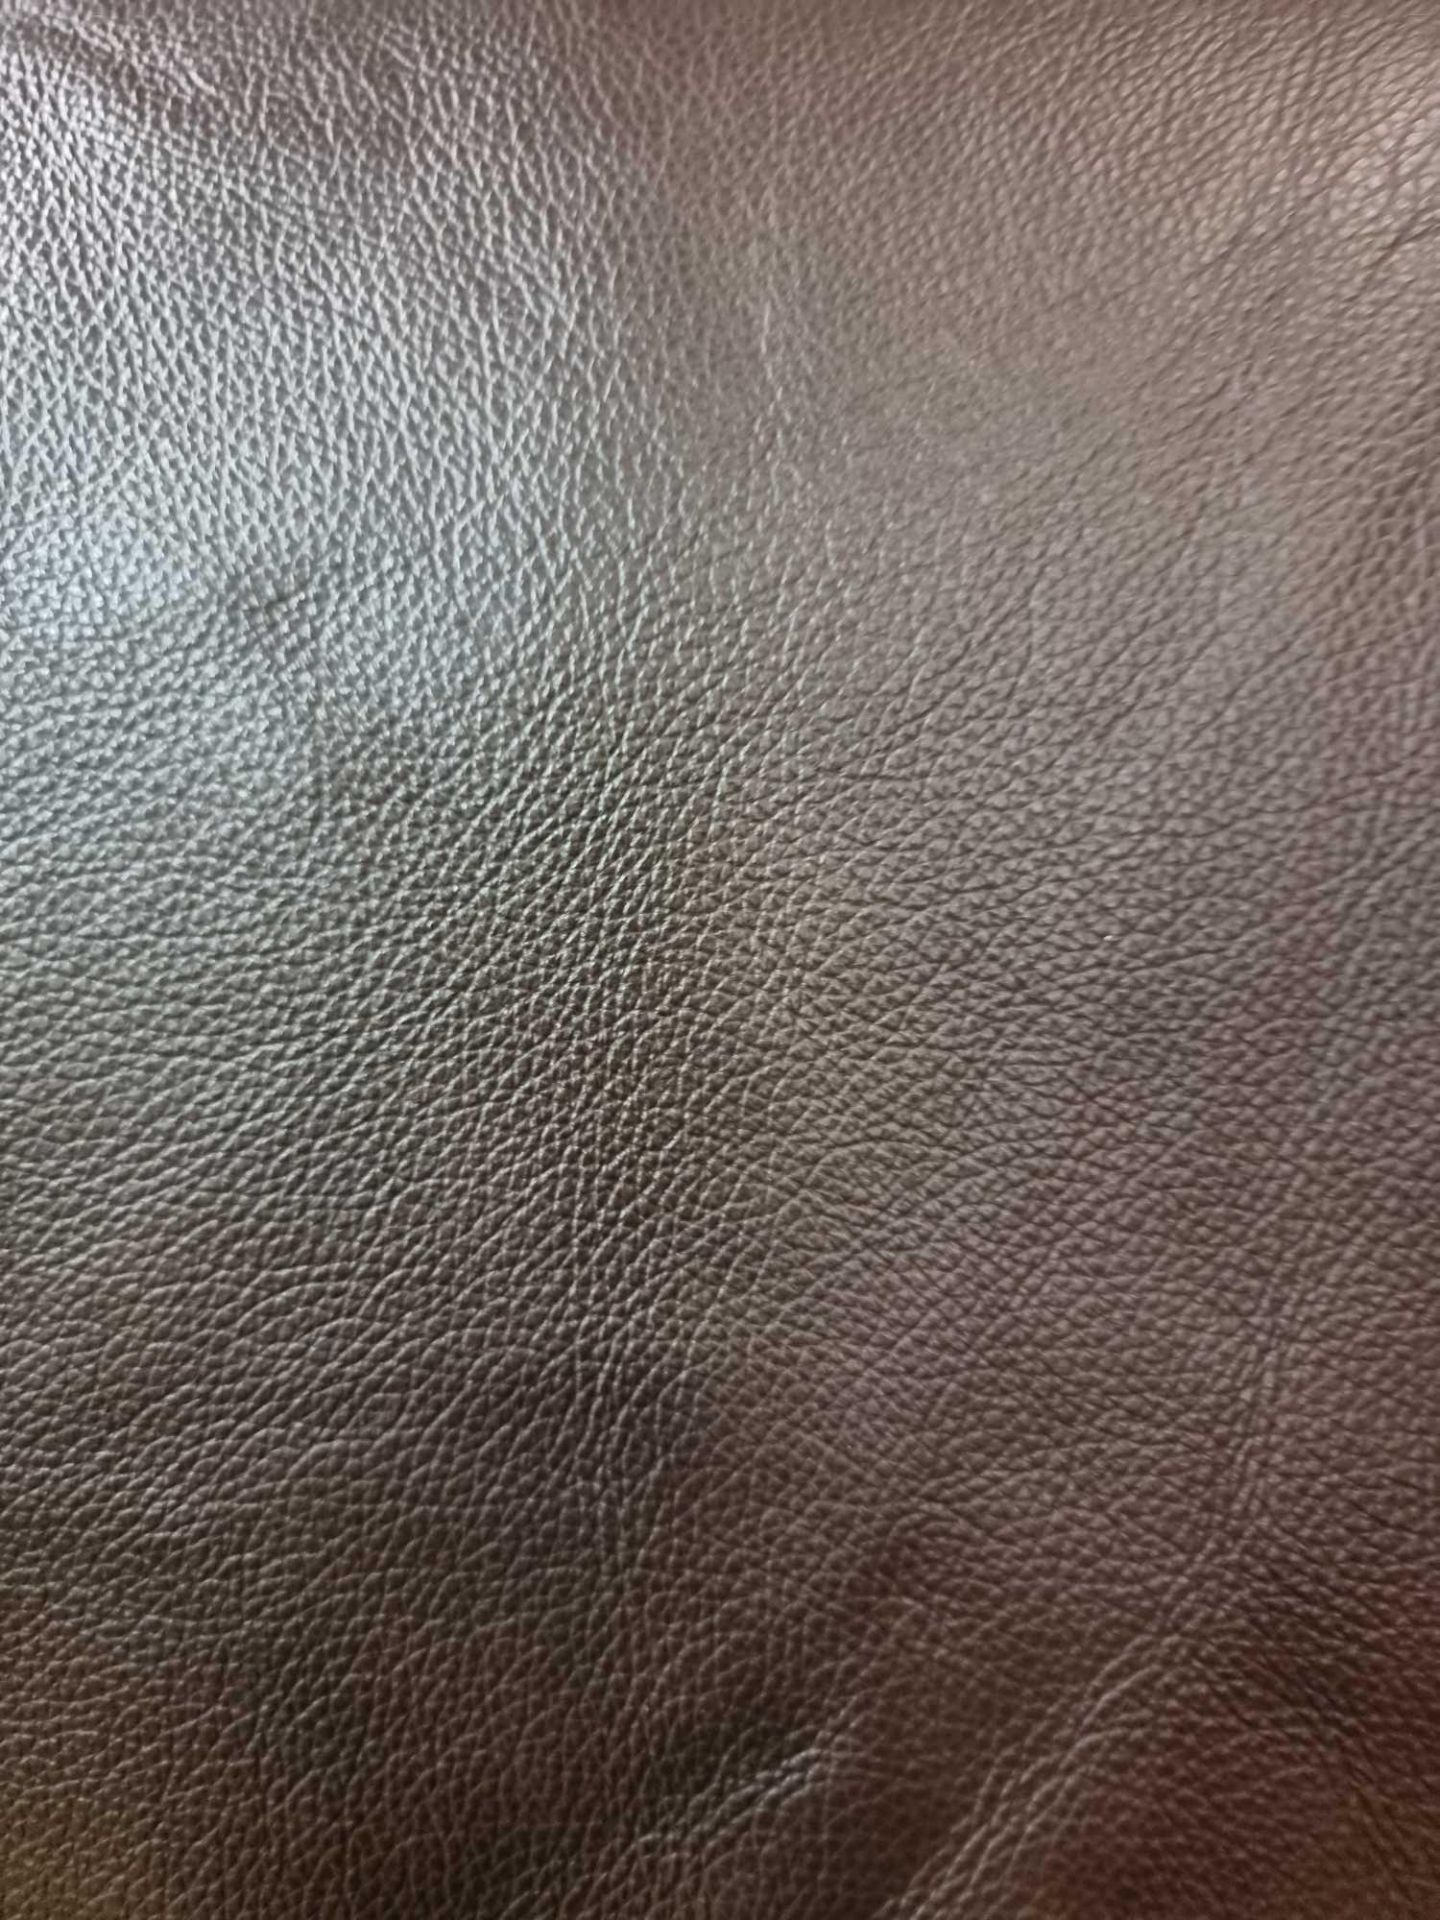 Mastrotto Dakota Chocolate Leather Hide approximately 3 96M2 2 2 x 1 8cm ( Hide No,107) - Bild 2 aus 2